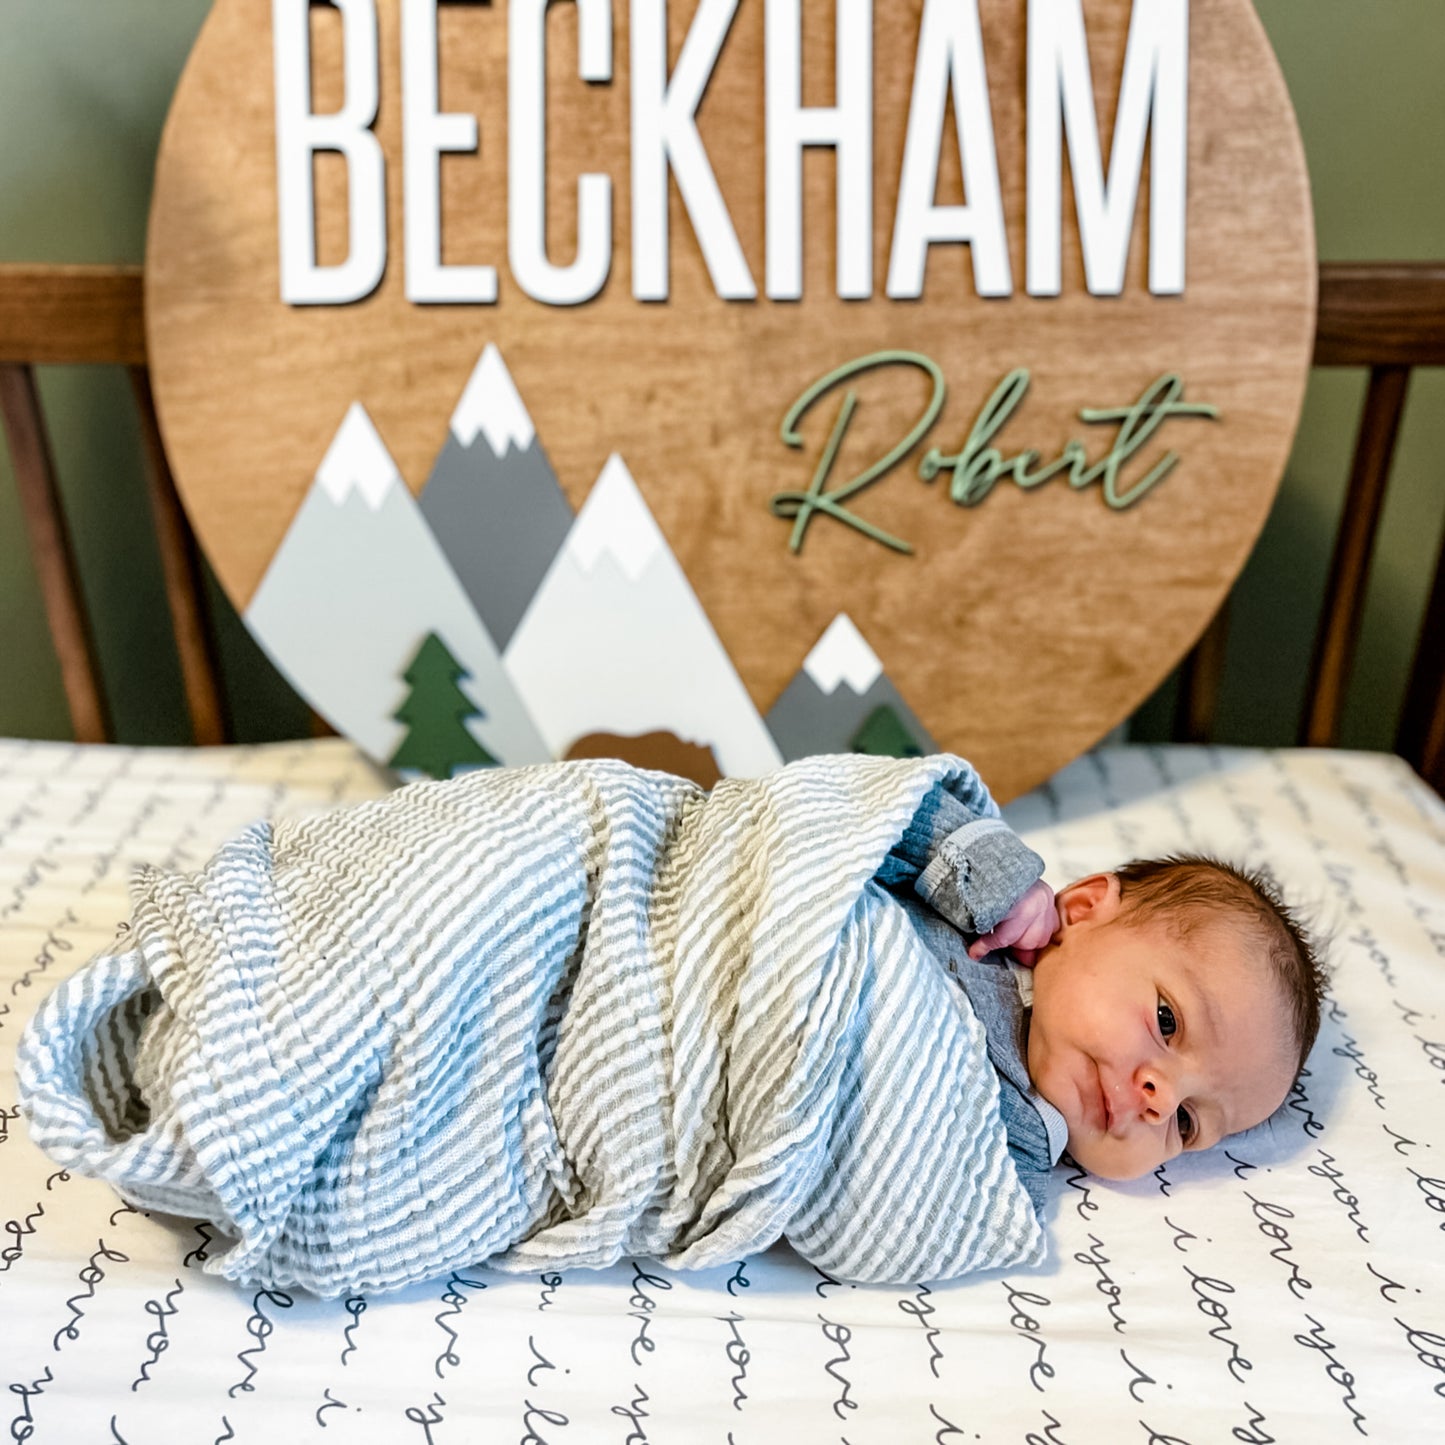 Beckham Robert Bear Mountain Round Name Sign